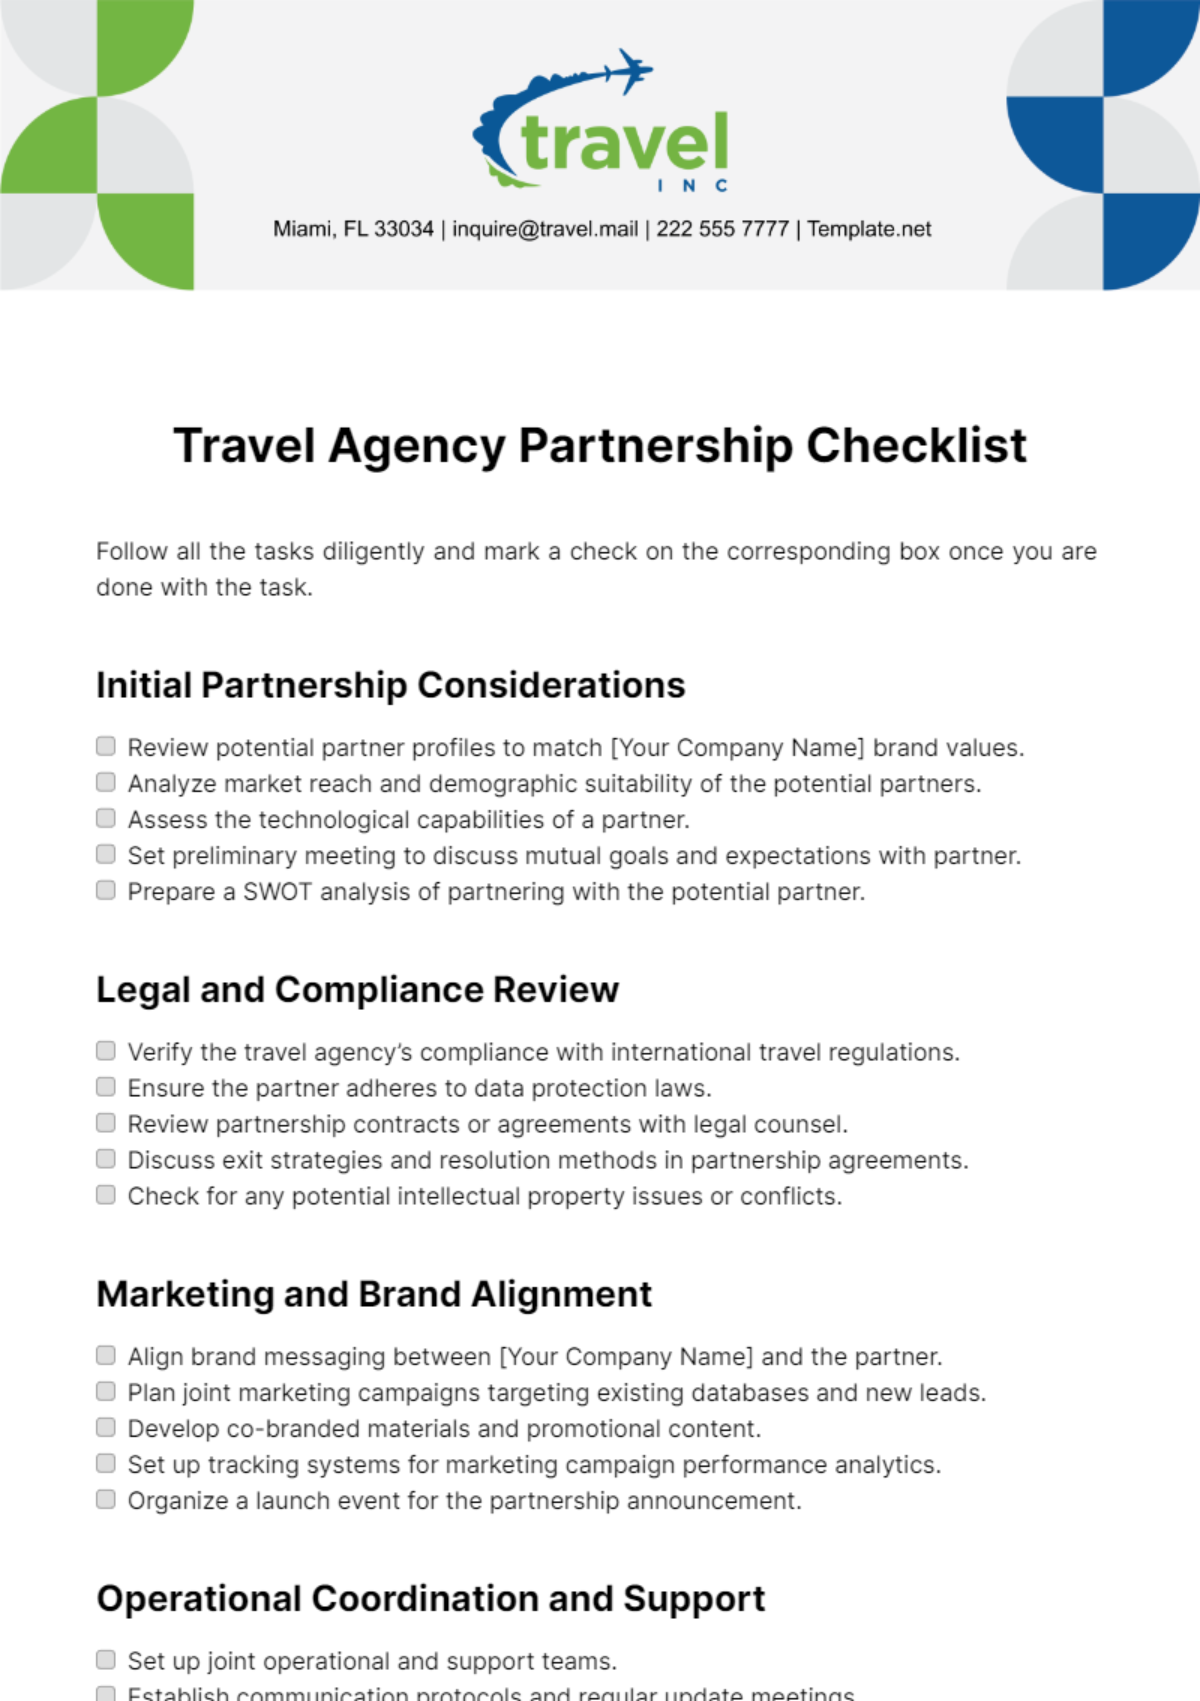 Travel Agency Partnership Checklist Template